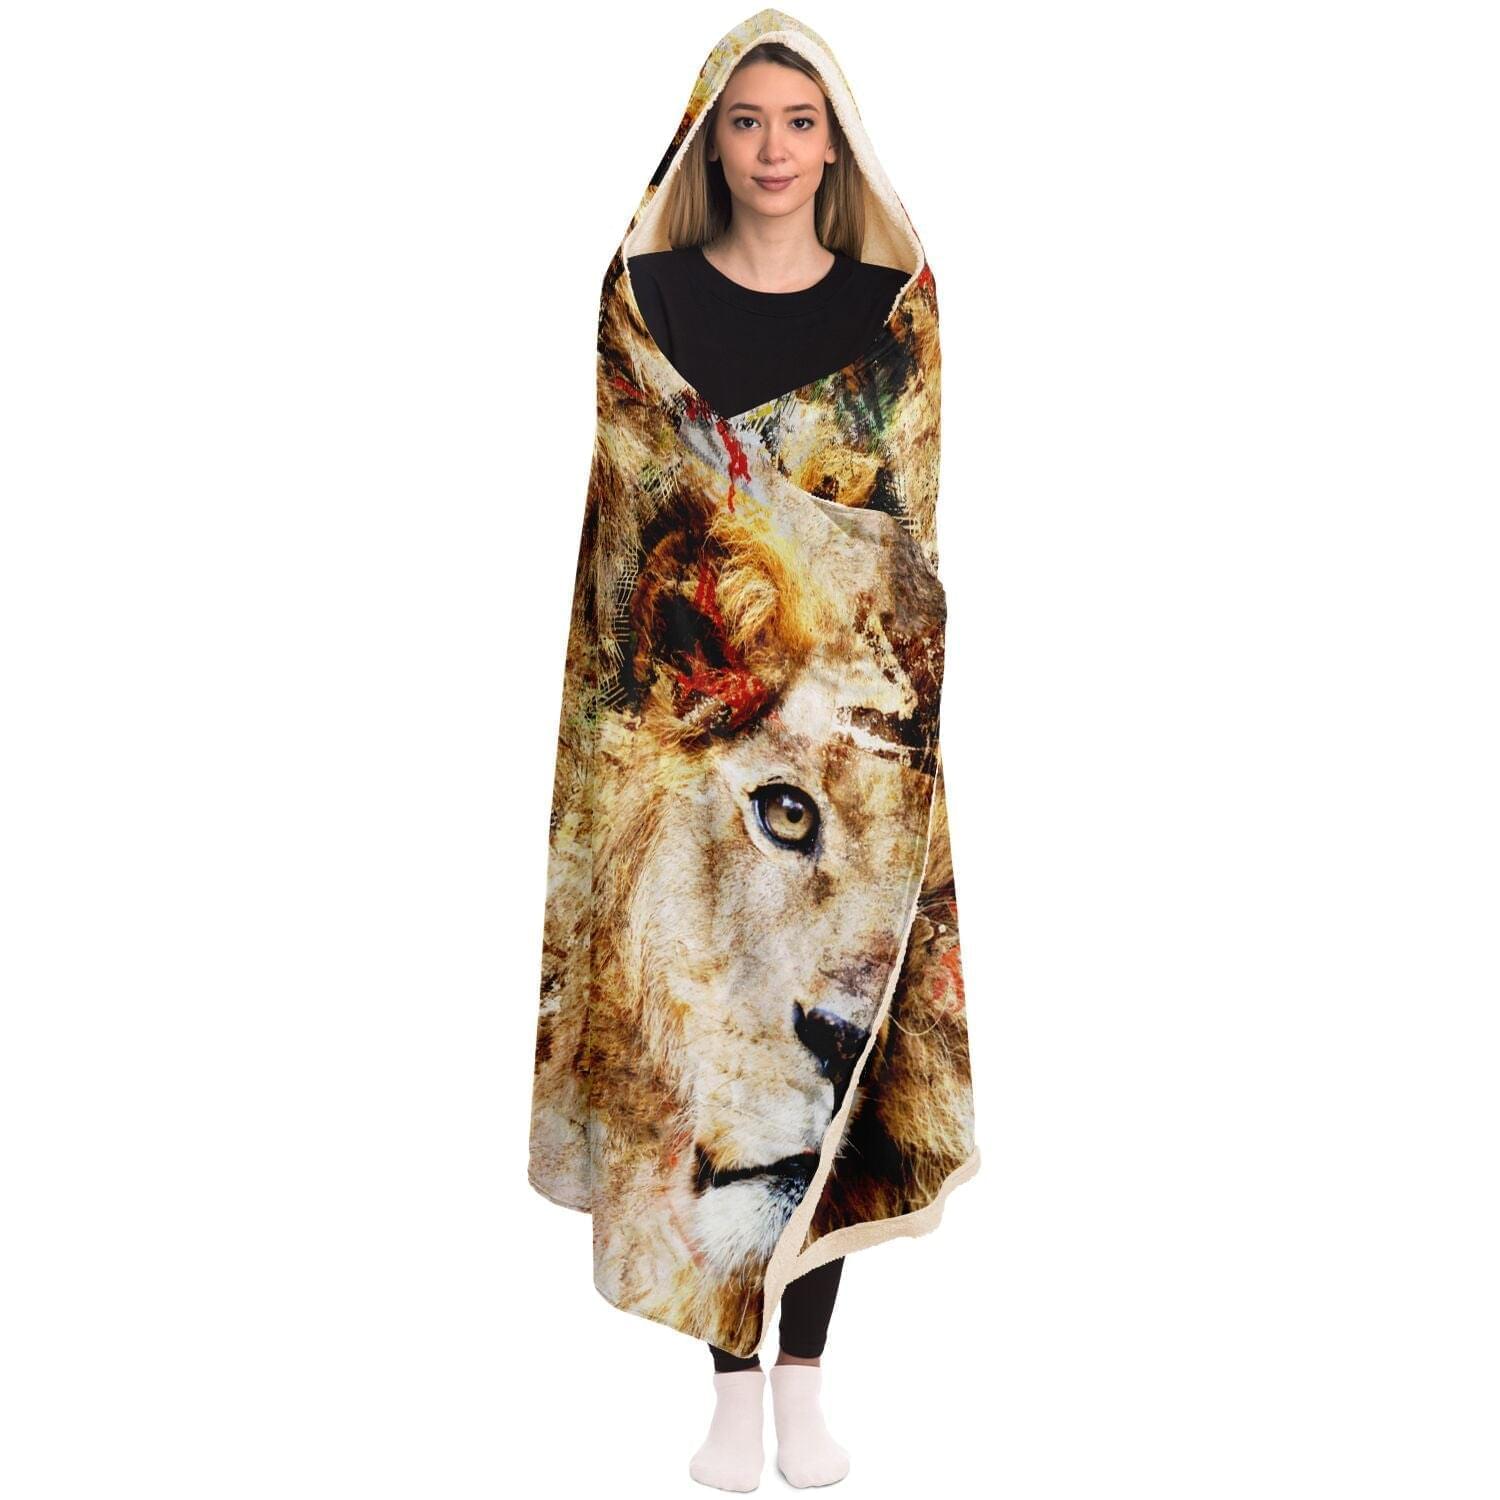 Lion Print Art Hooded Blanket Gift Idea HOO-DESIGN.SHOP